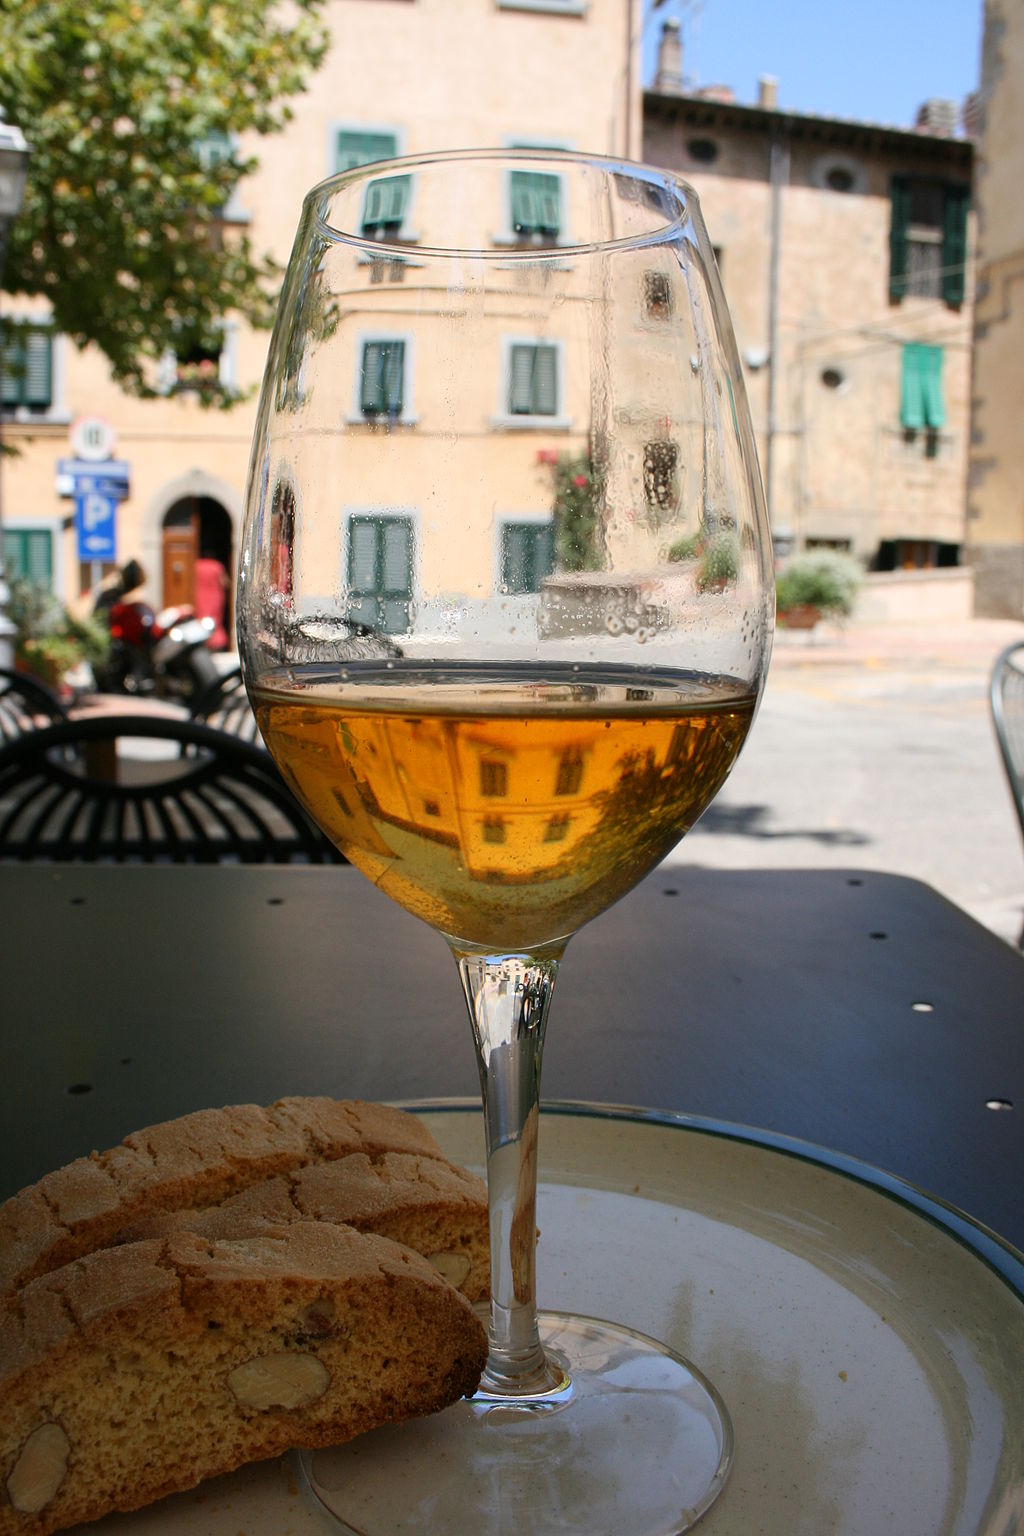 .A glass of vin santo